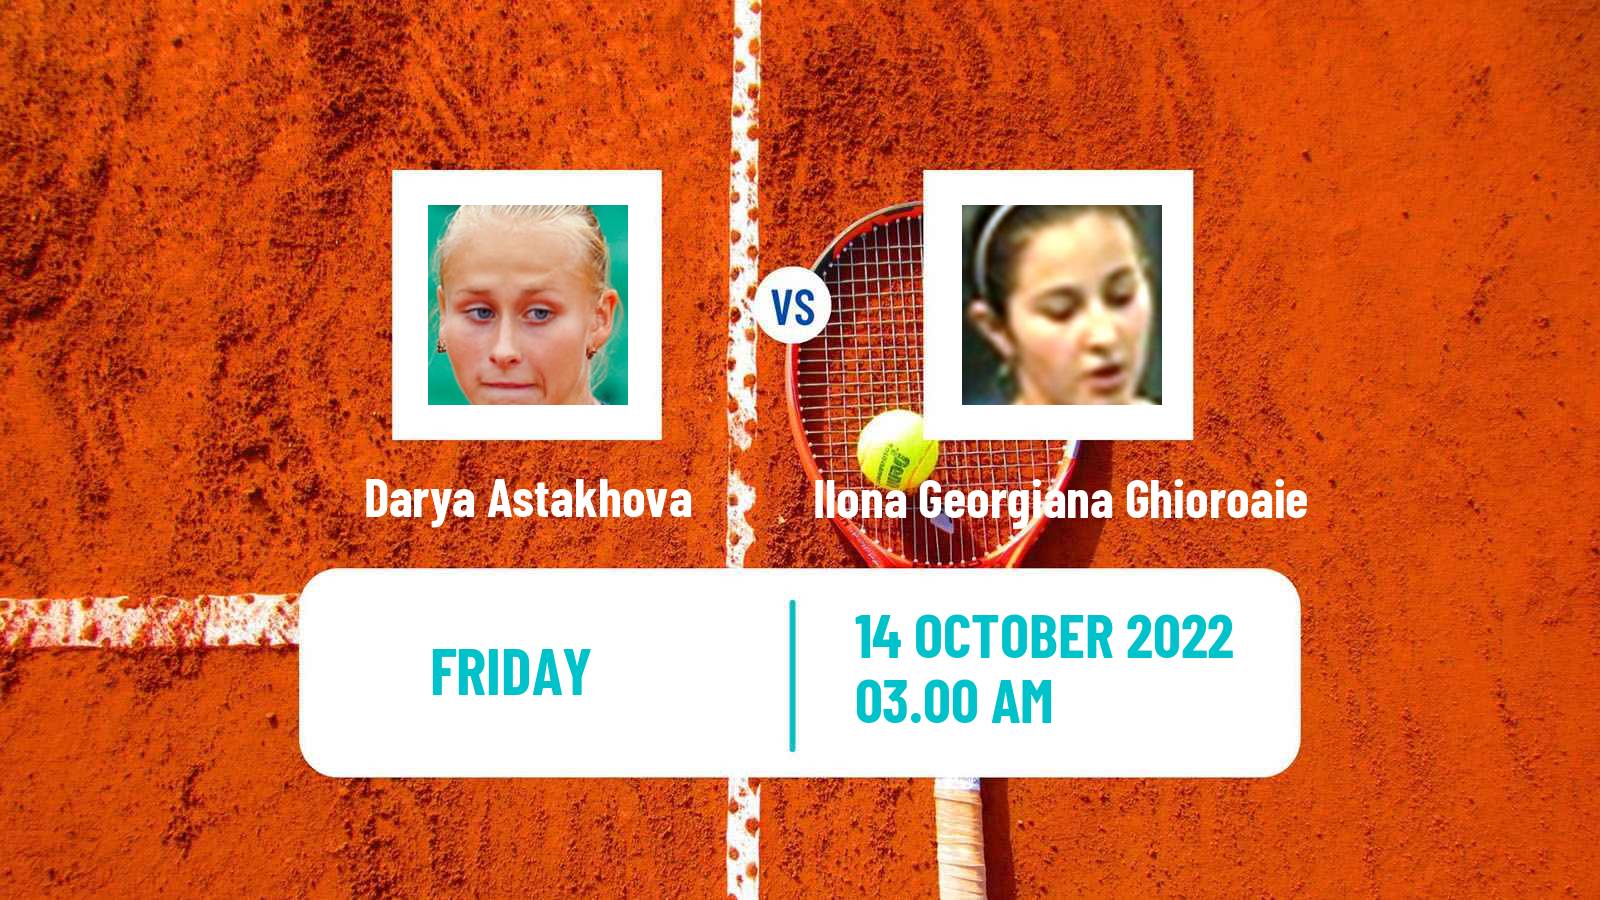 Tennis ITF Tournaments Darya Astakhova - Ilona Georgiana Ghioroaie